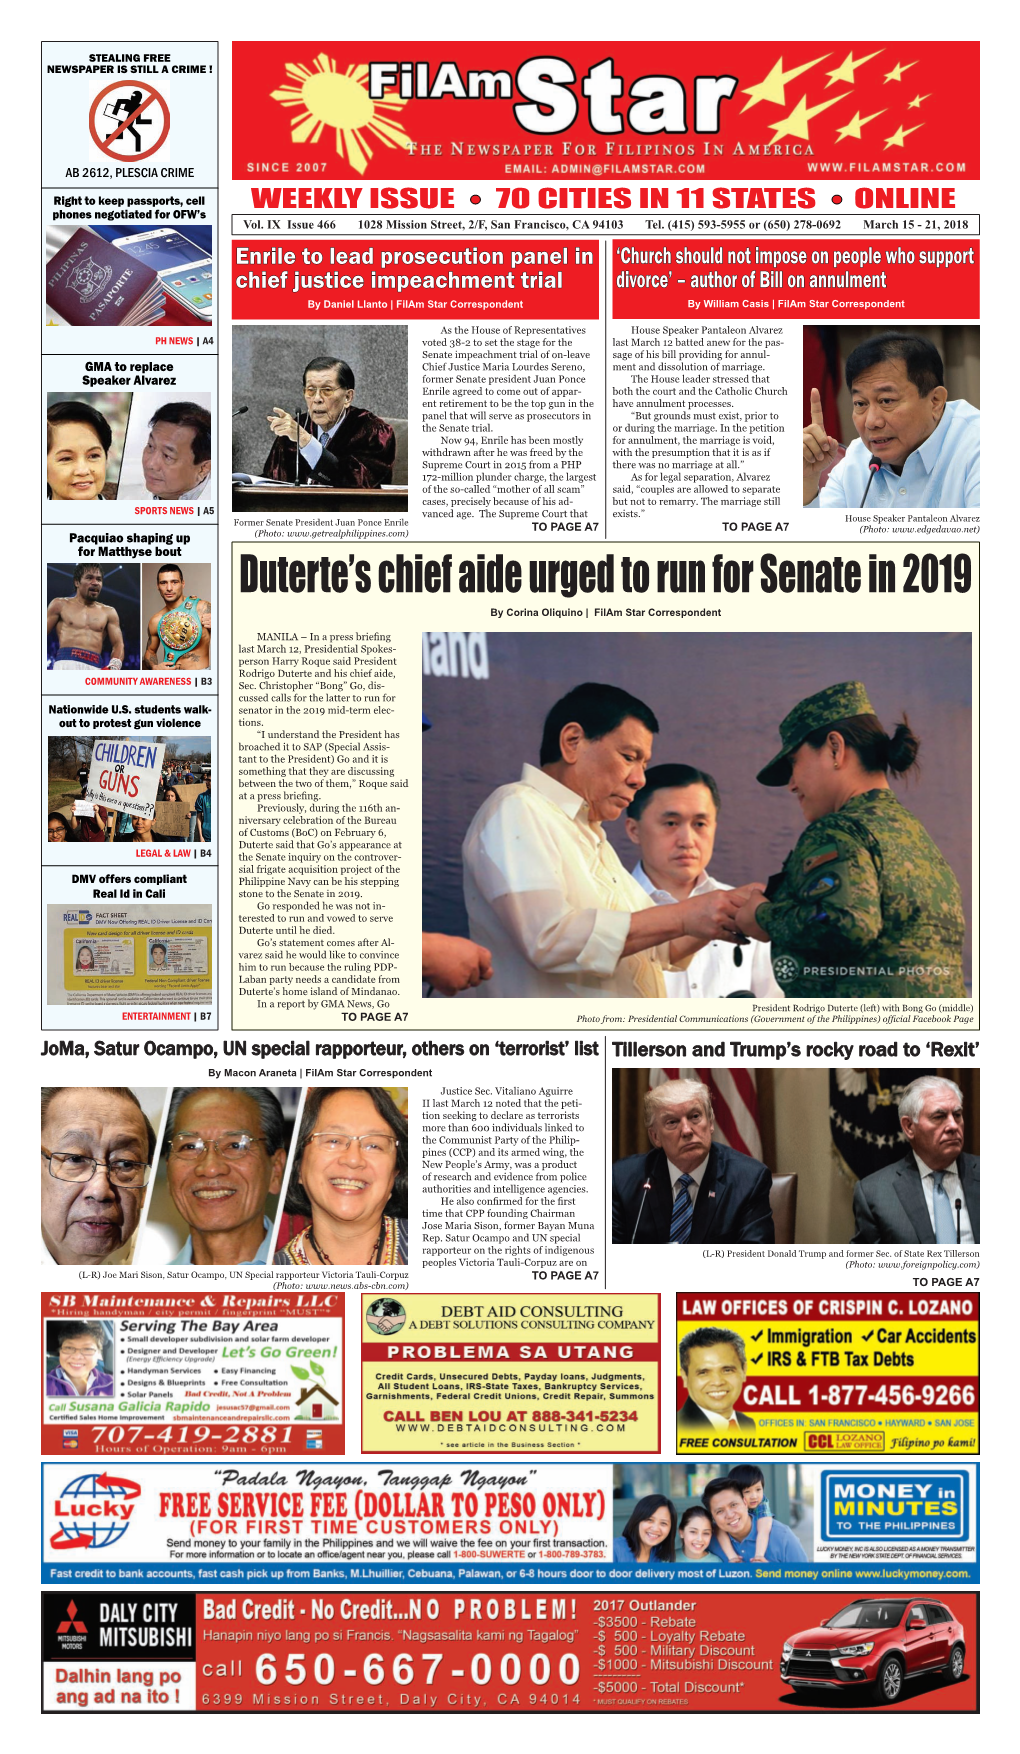 Duterte's Chief Aide Urged to Run for Senate in 2019